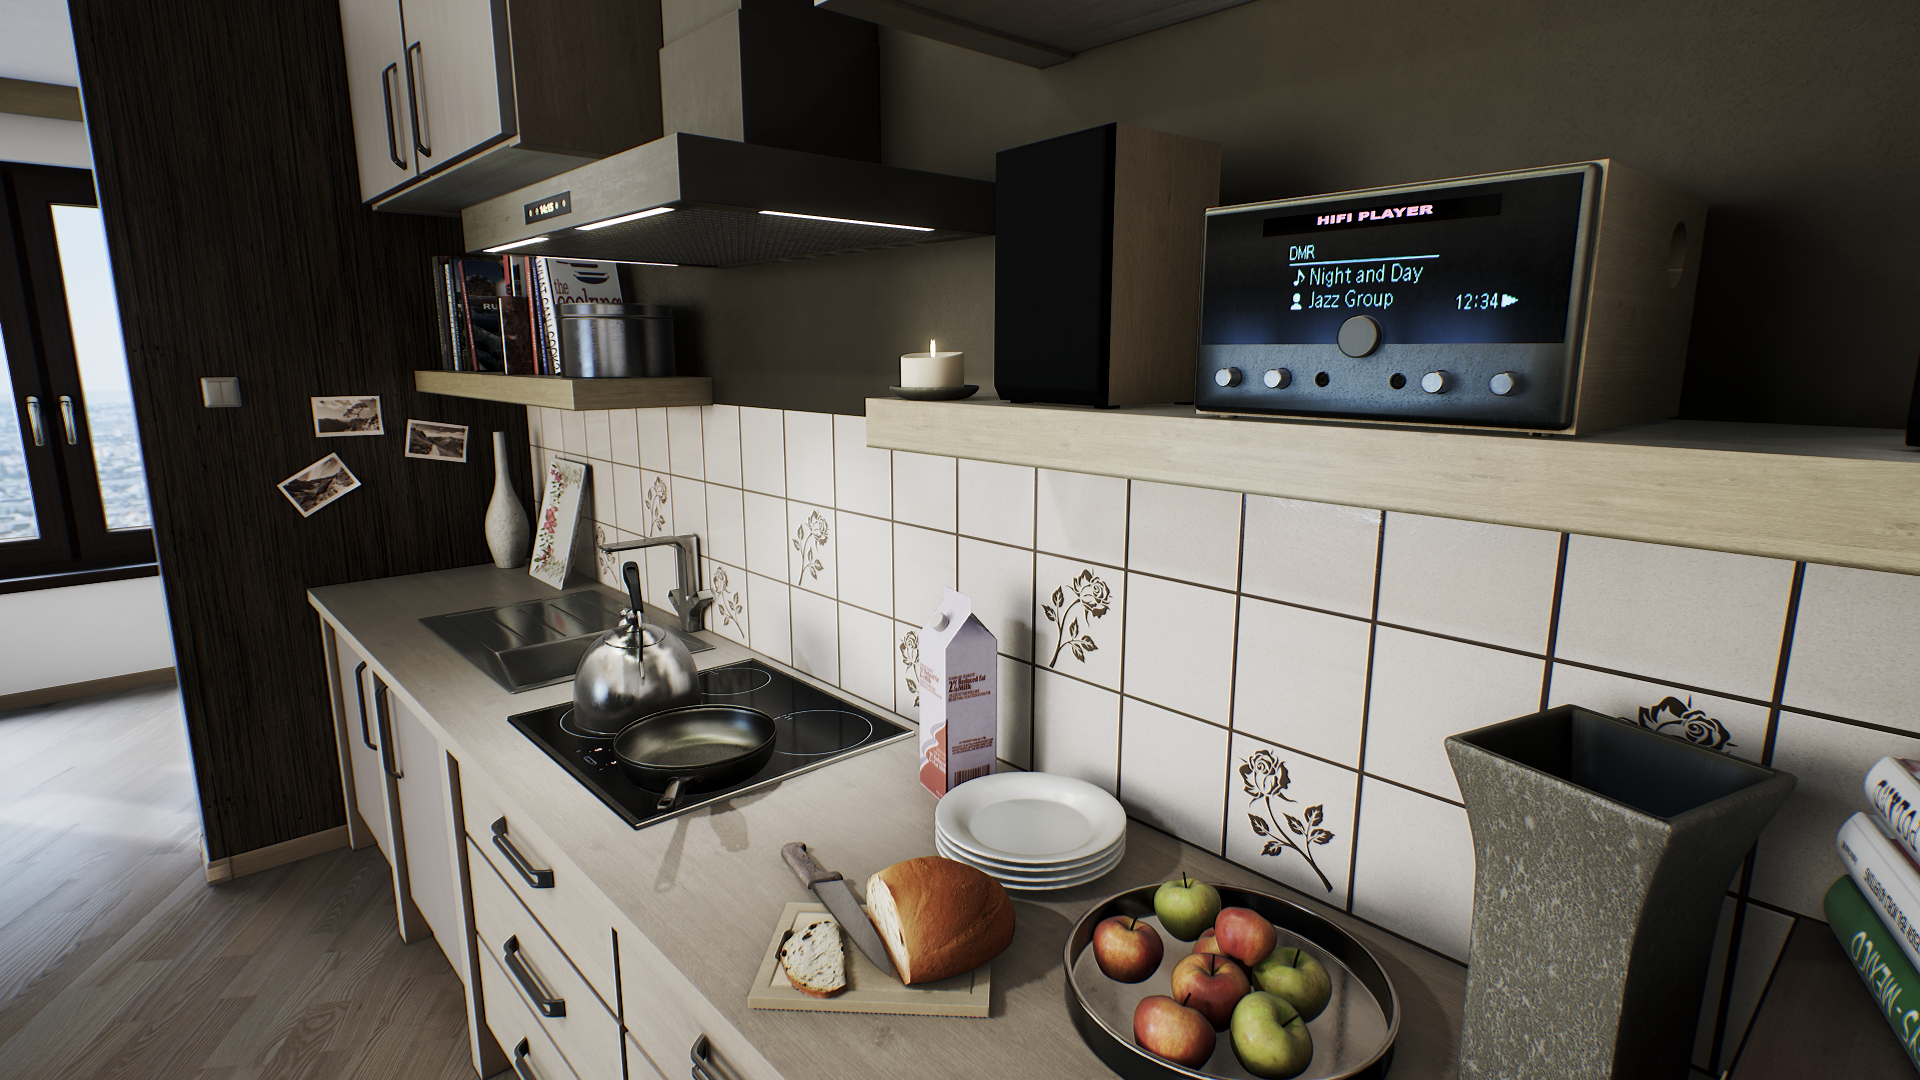 General 1920x1080 room Archviz CGI indoors hotplate (Machine) knife food fruit bread